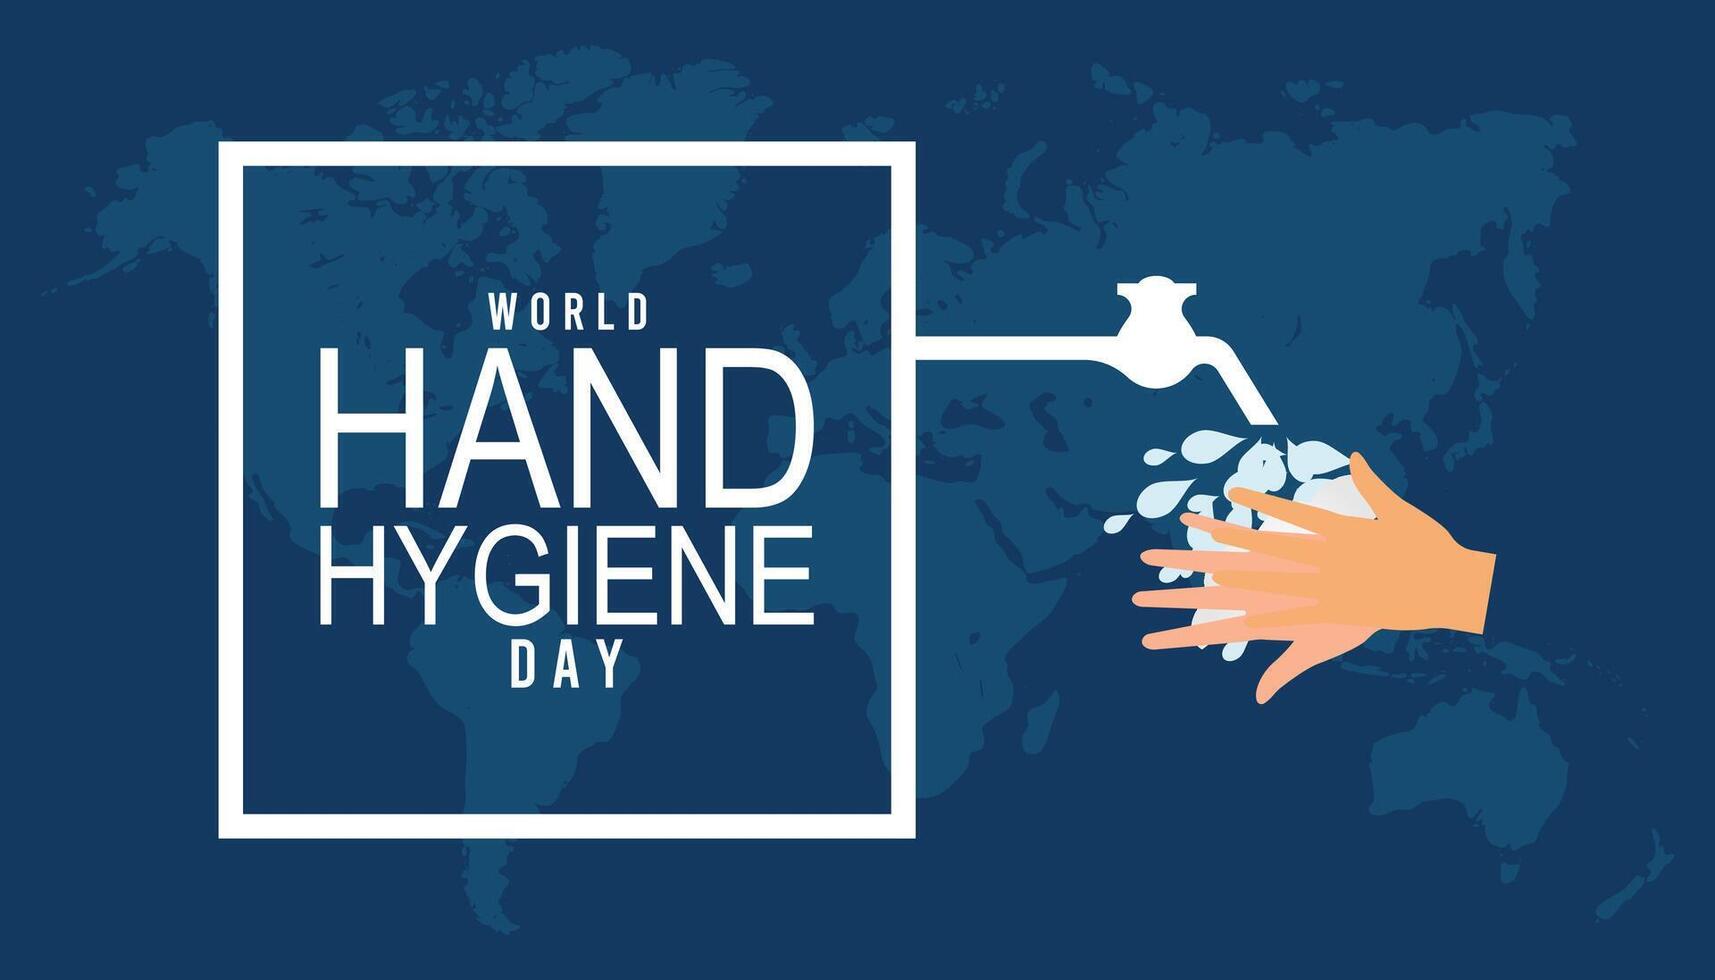 mundo mano higiene día observado cada año en mayo. modelo para fondo, bandera, tarjeta, póster con texto inscripción. vector